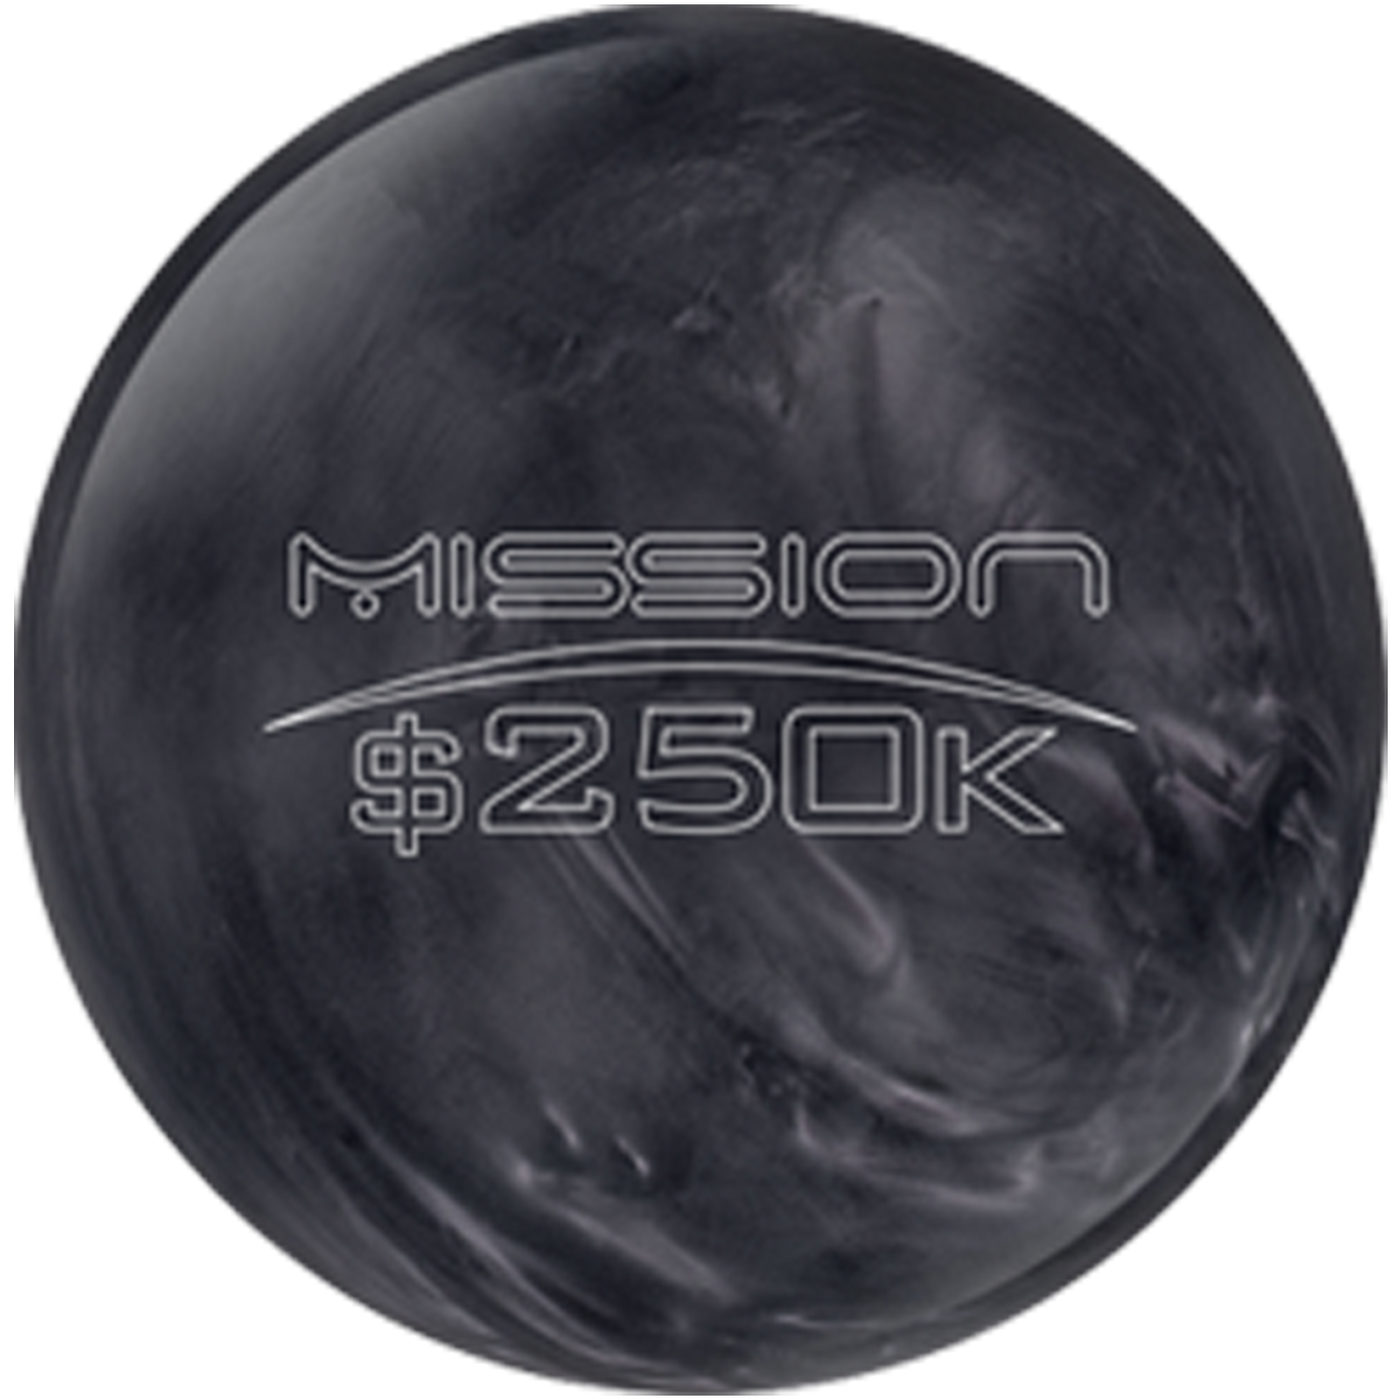 Mission $250K Bowling Ball